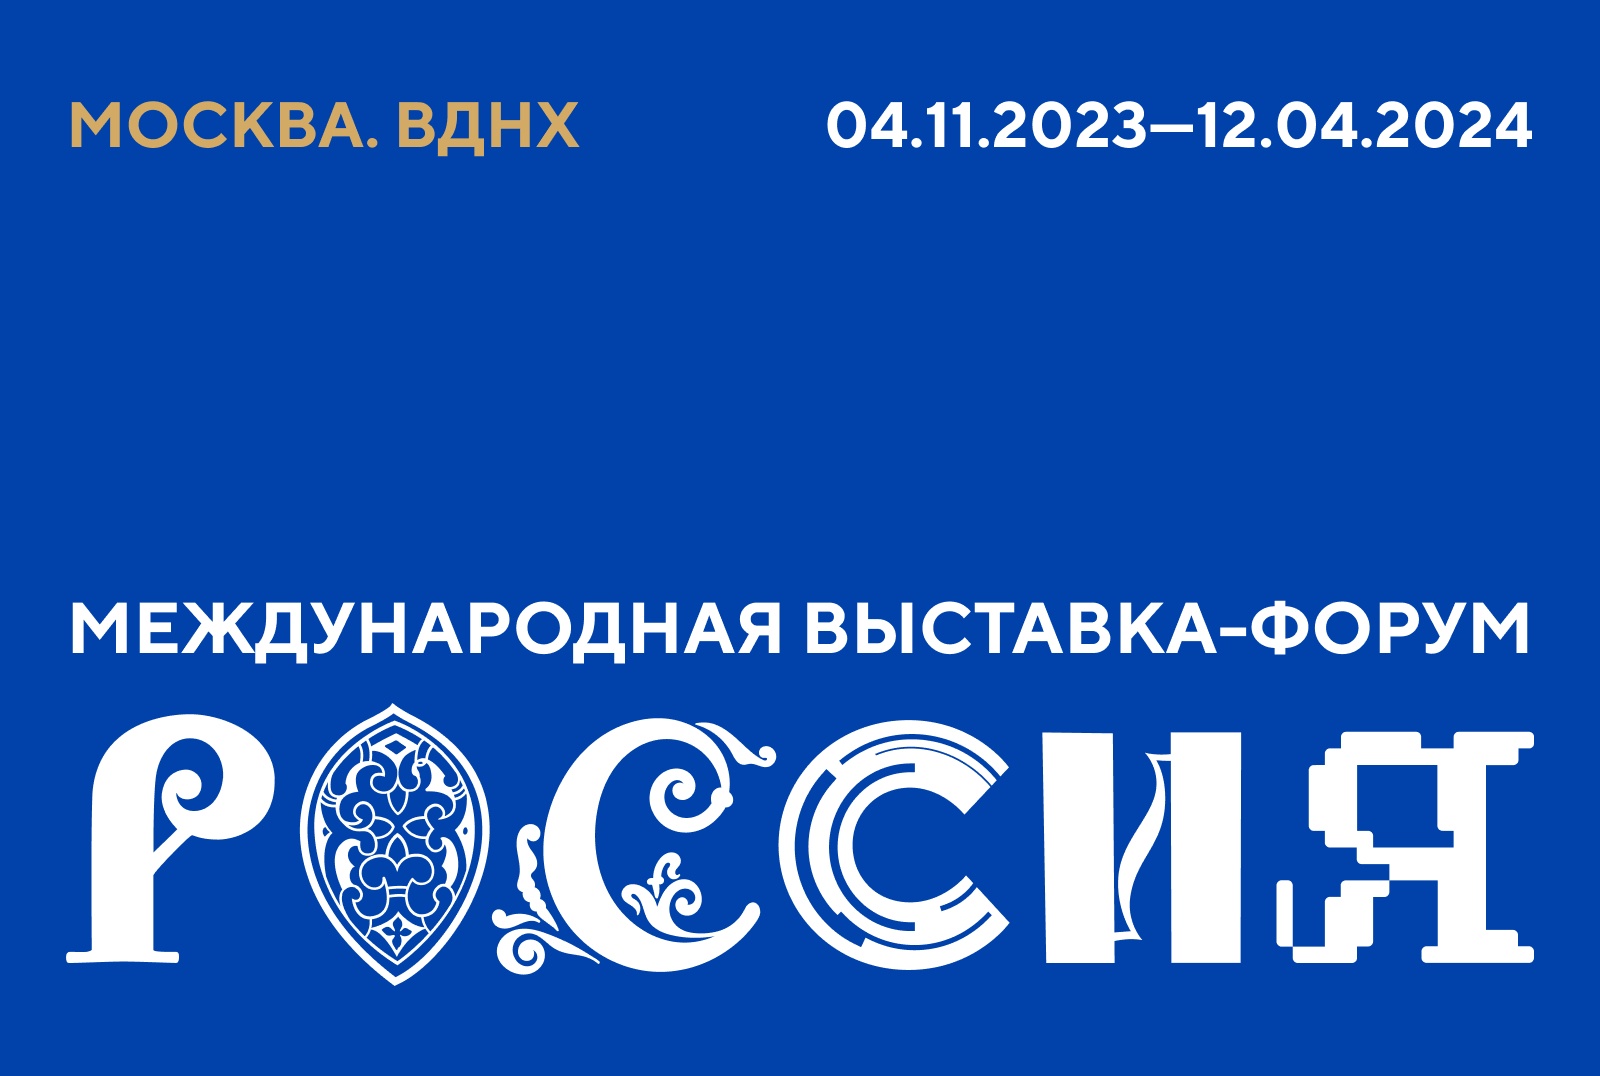 На ВДНХ открылась Международная выставка-форум «Россия»